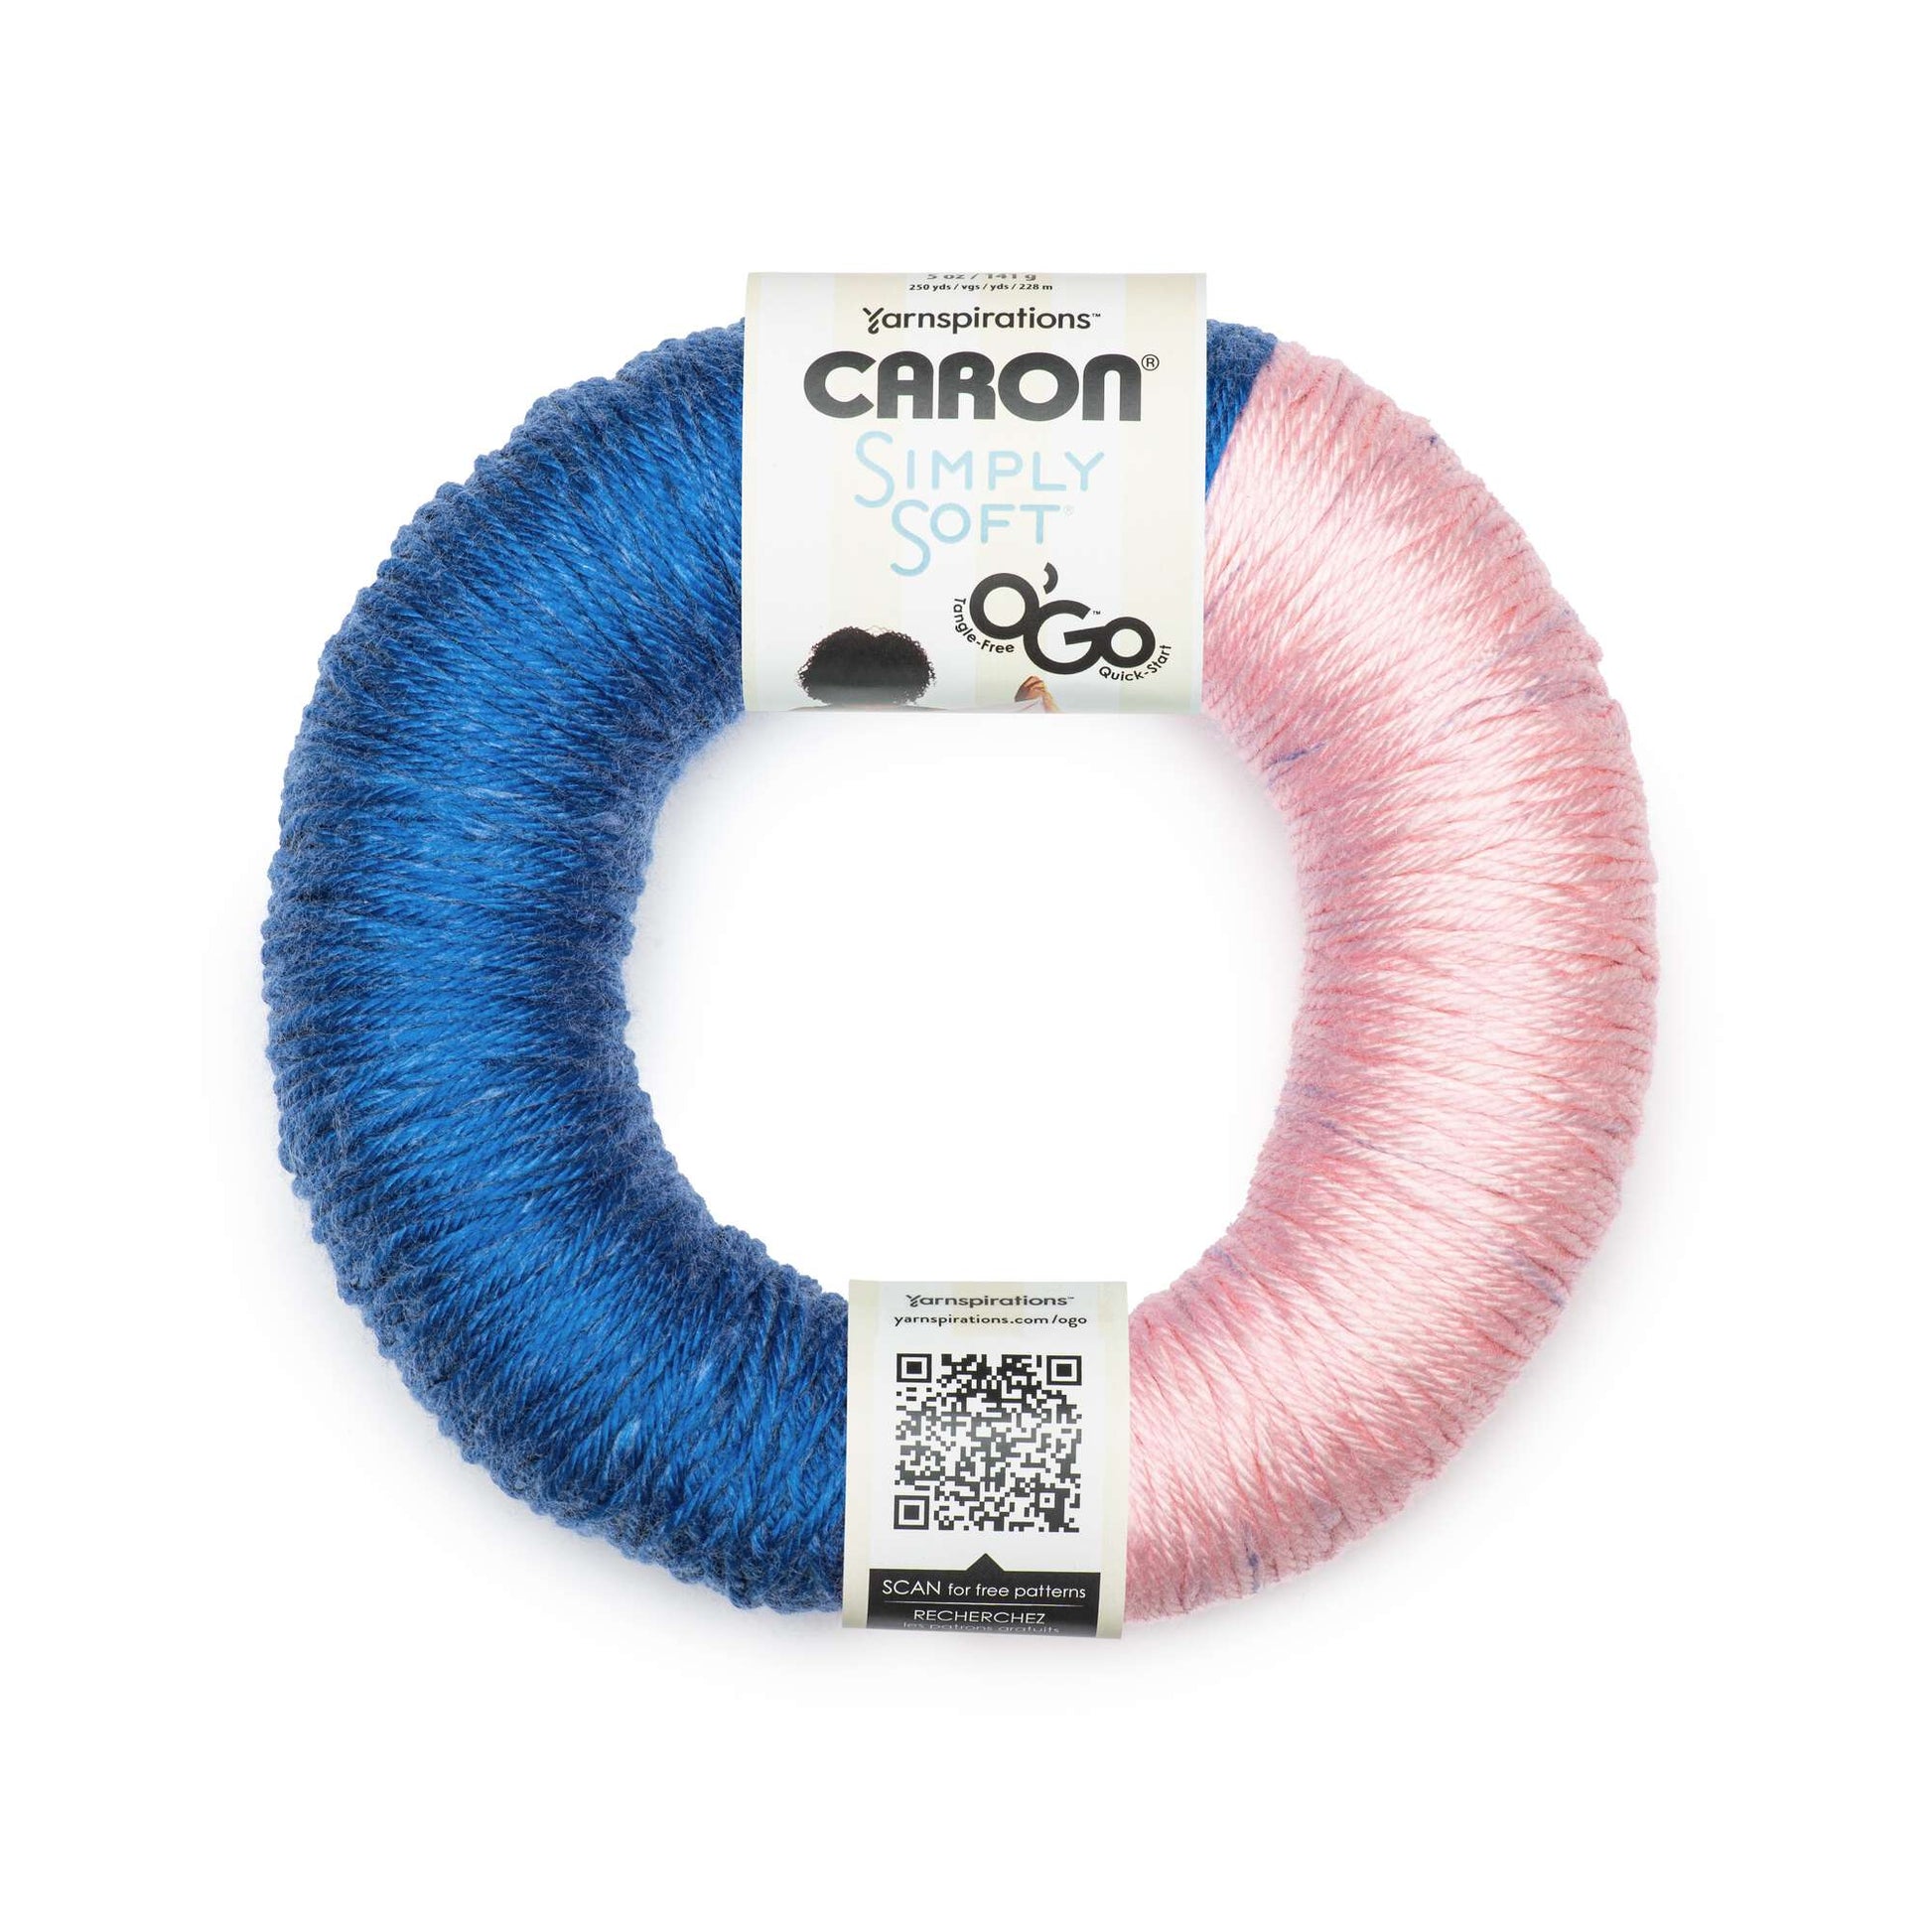 Caron Simply Soft O'Go (141g/5oz) - Clearance Shades* Royal Blue Soft Pink